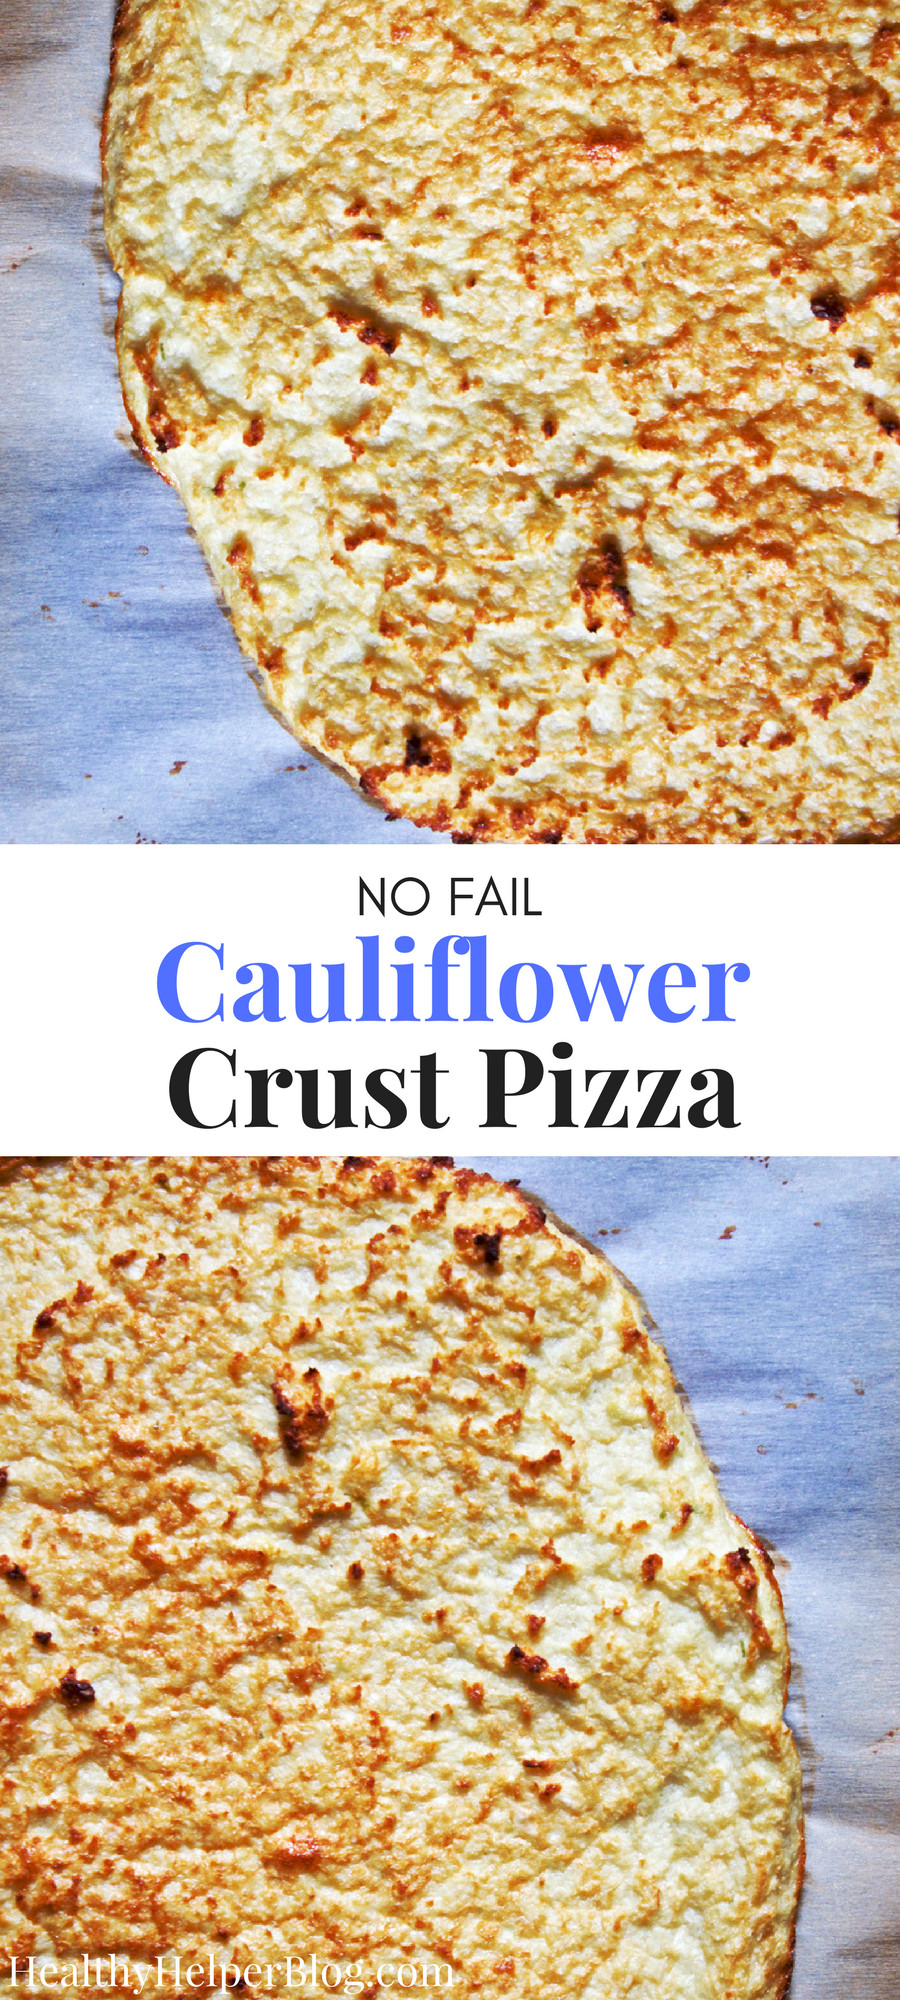 Cauliflower Pizza Crust Where To Buy
 NO FAIL Cauliflower Crust Pizza [gluten free grain free